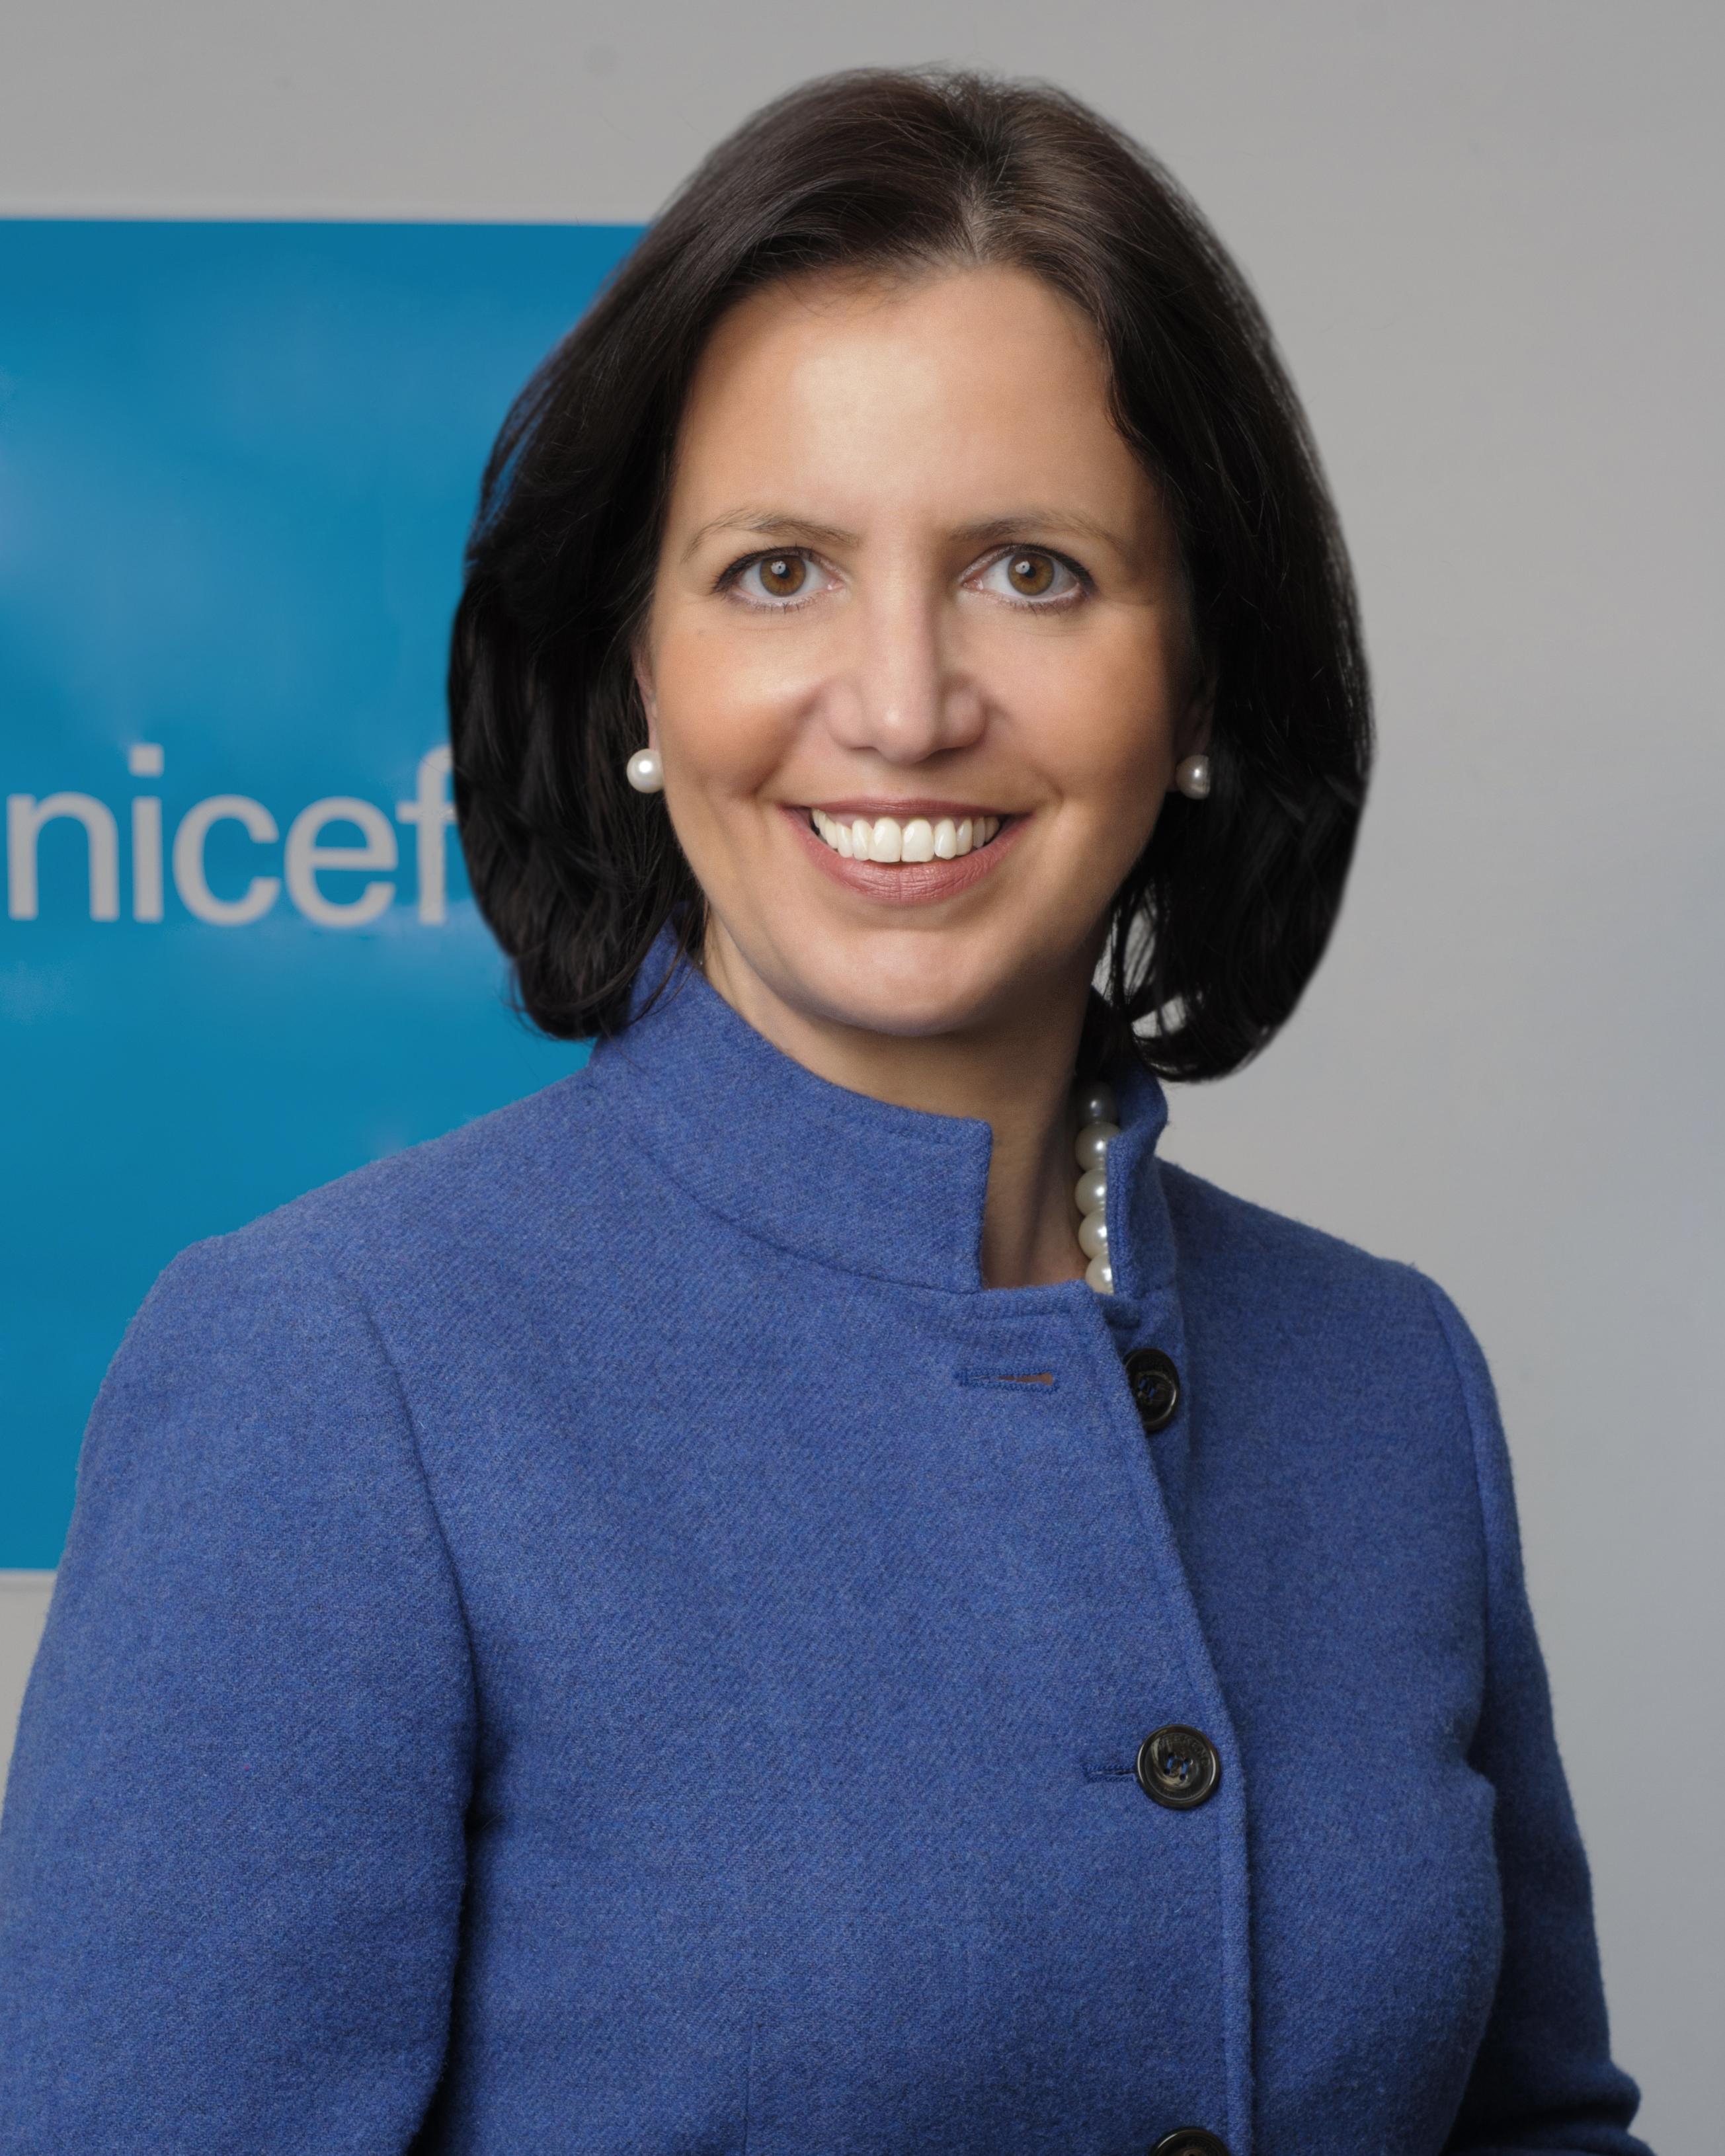 Emese Danks, Former Executive Director, UNICEF In Hungary